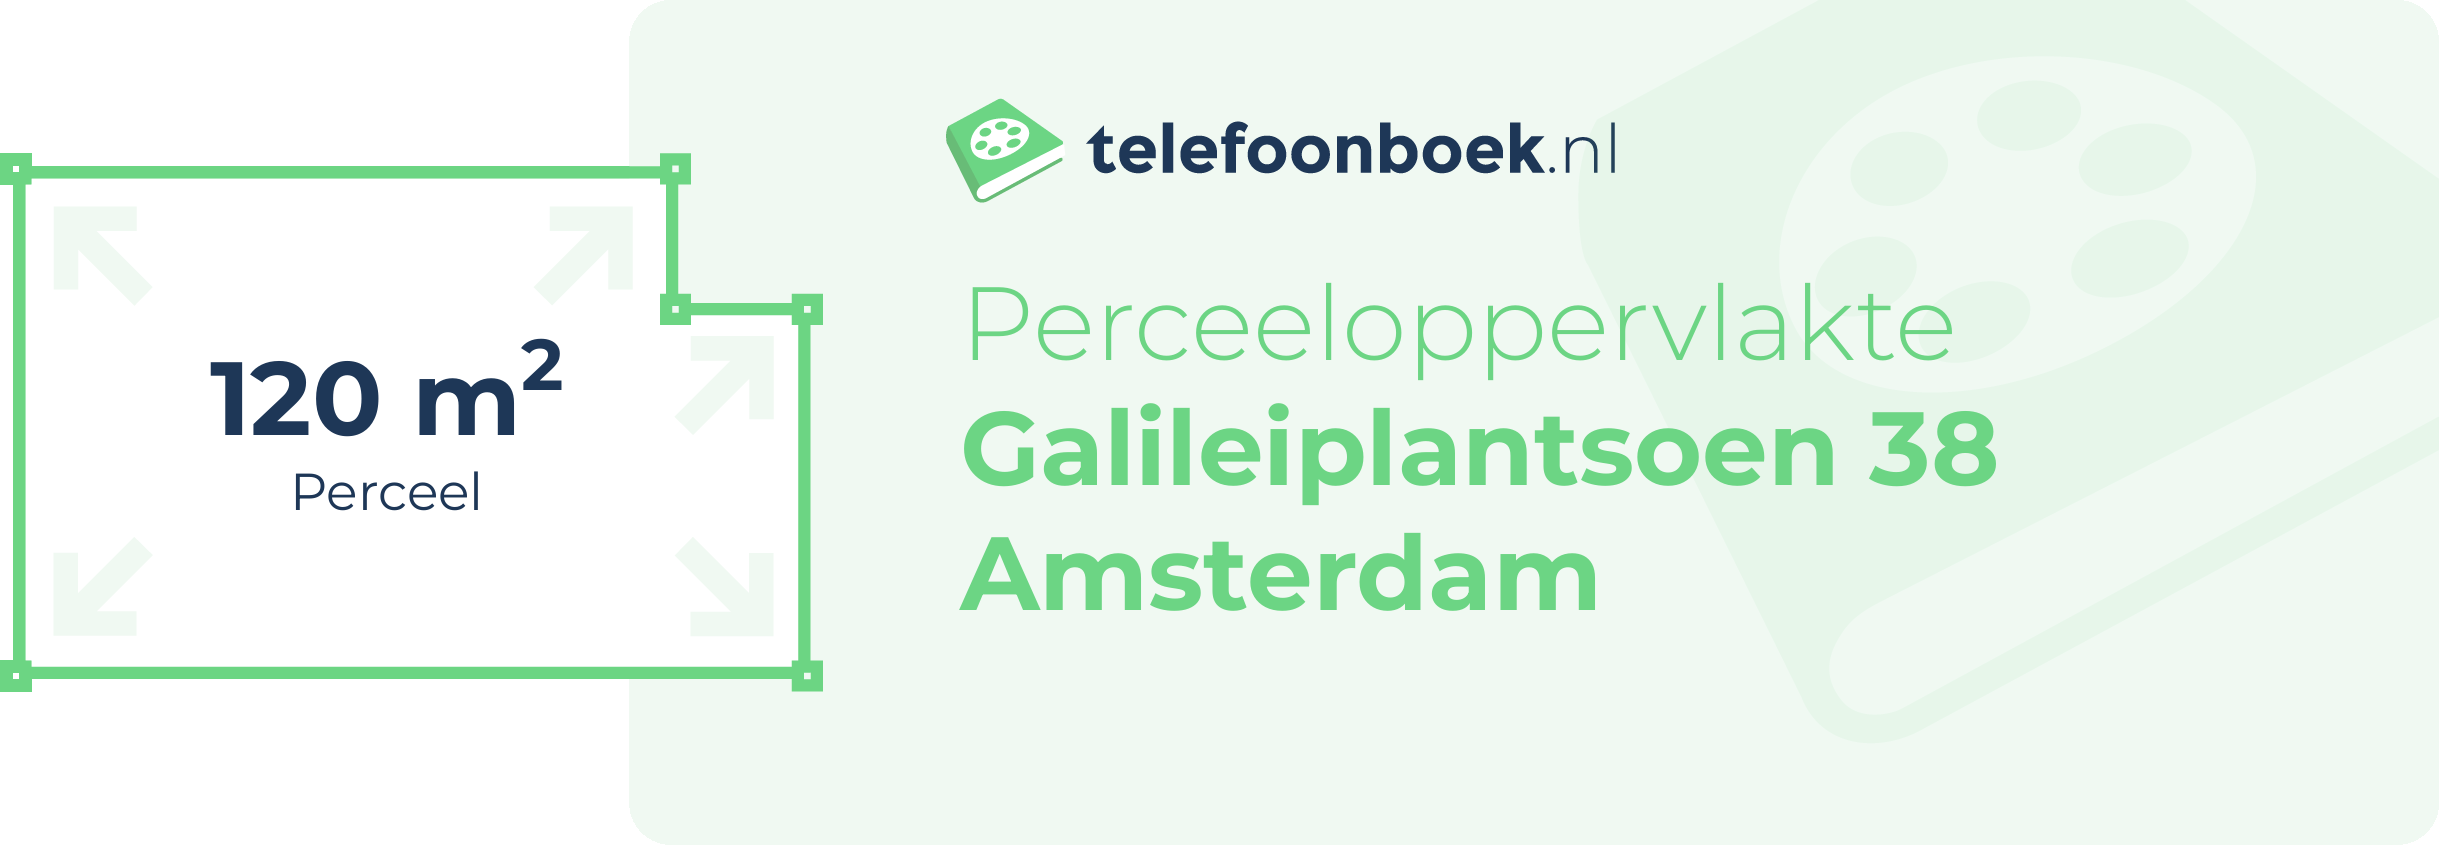 Perceeloppervlakte Galileiplantsoen 38 Amsterdam